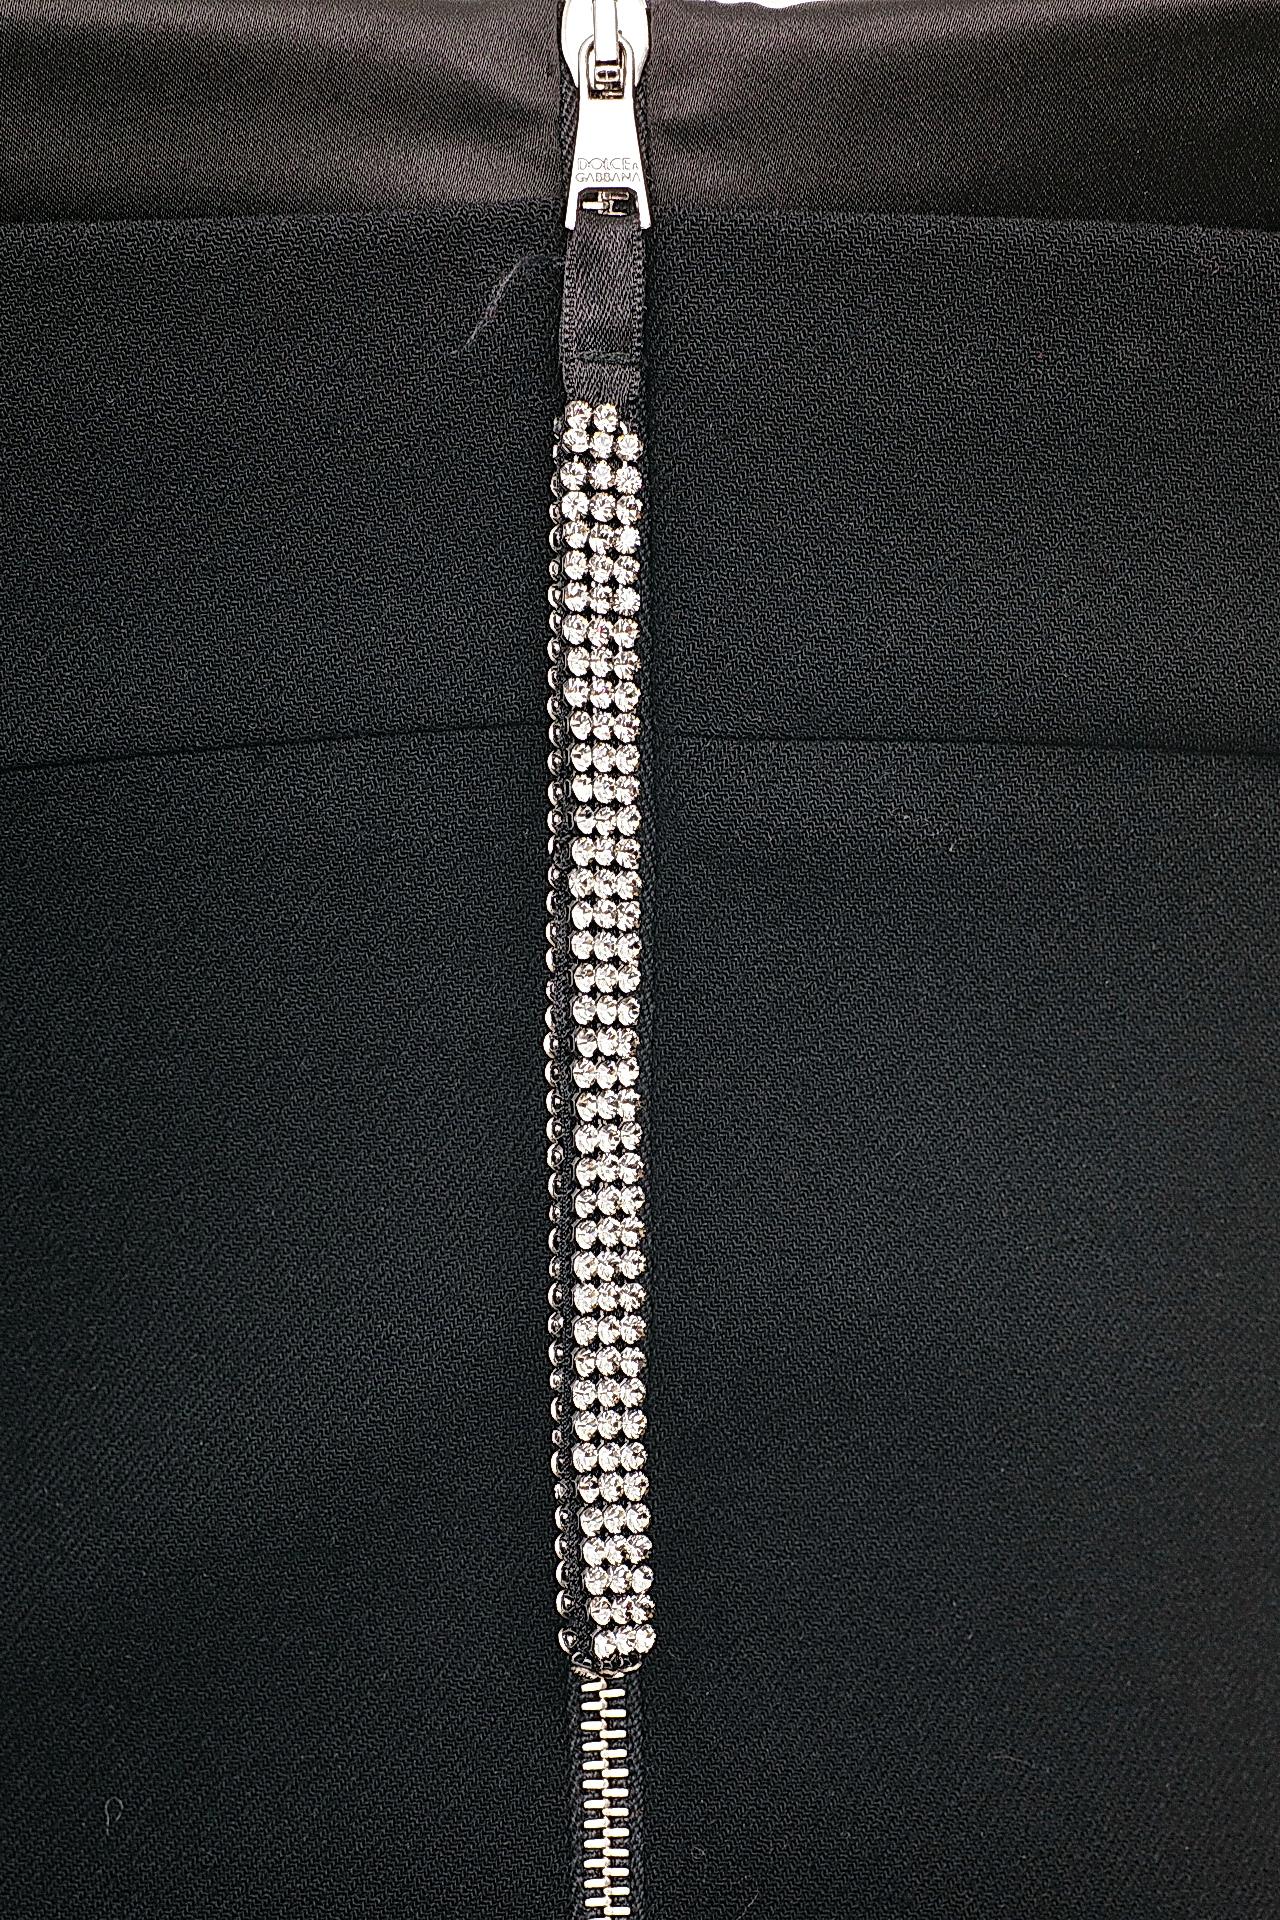 Women's 2007 Dolce & Gabbana Chain Embellished Black Corset Dress 42 - 6